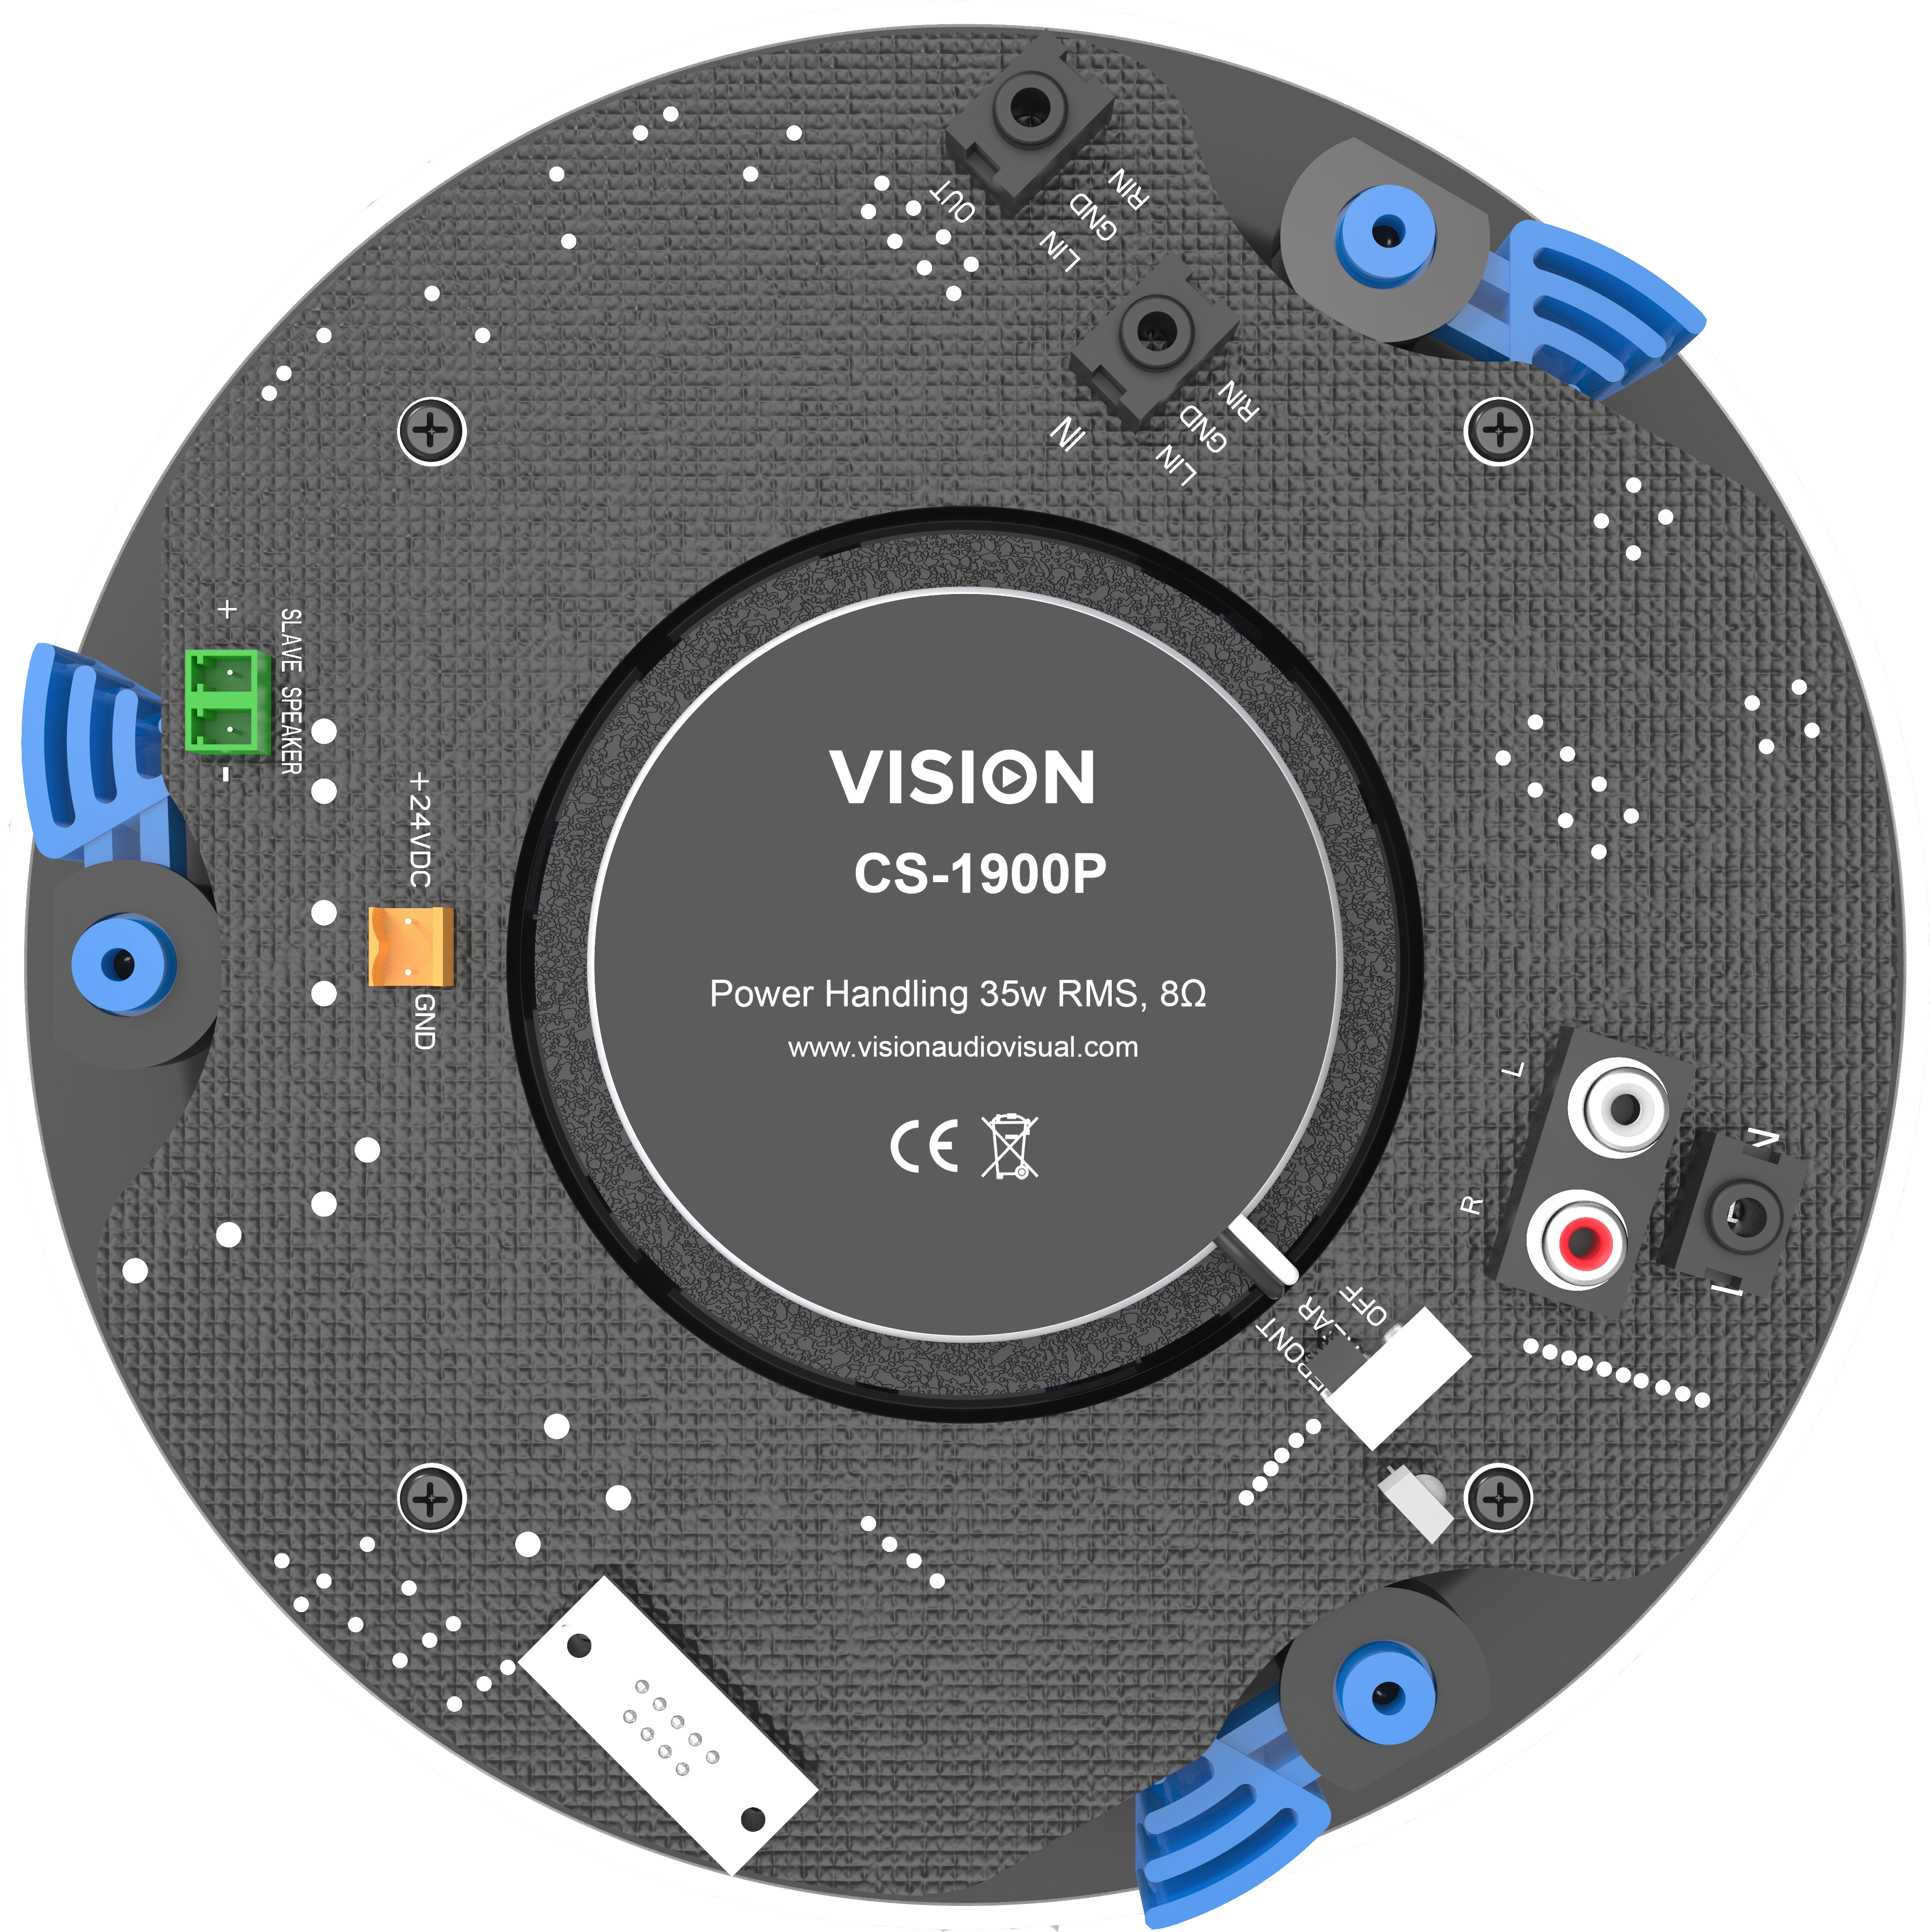 Altavoces autoamplificados VISION SP-1800P - 60W - Bluetooth - LED Visual